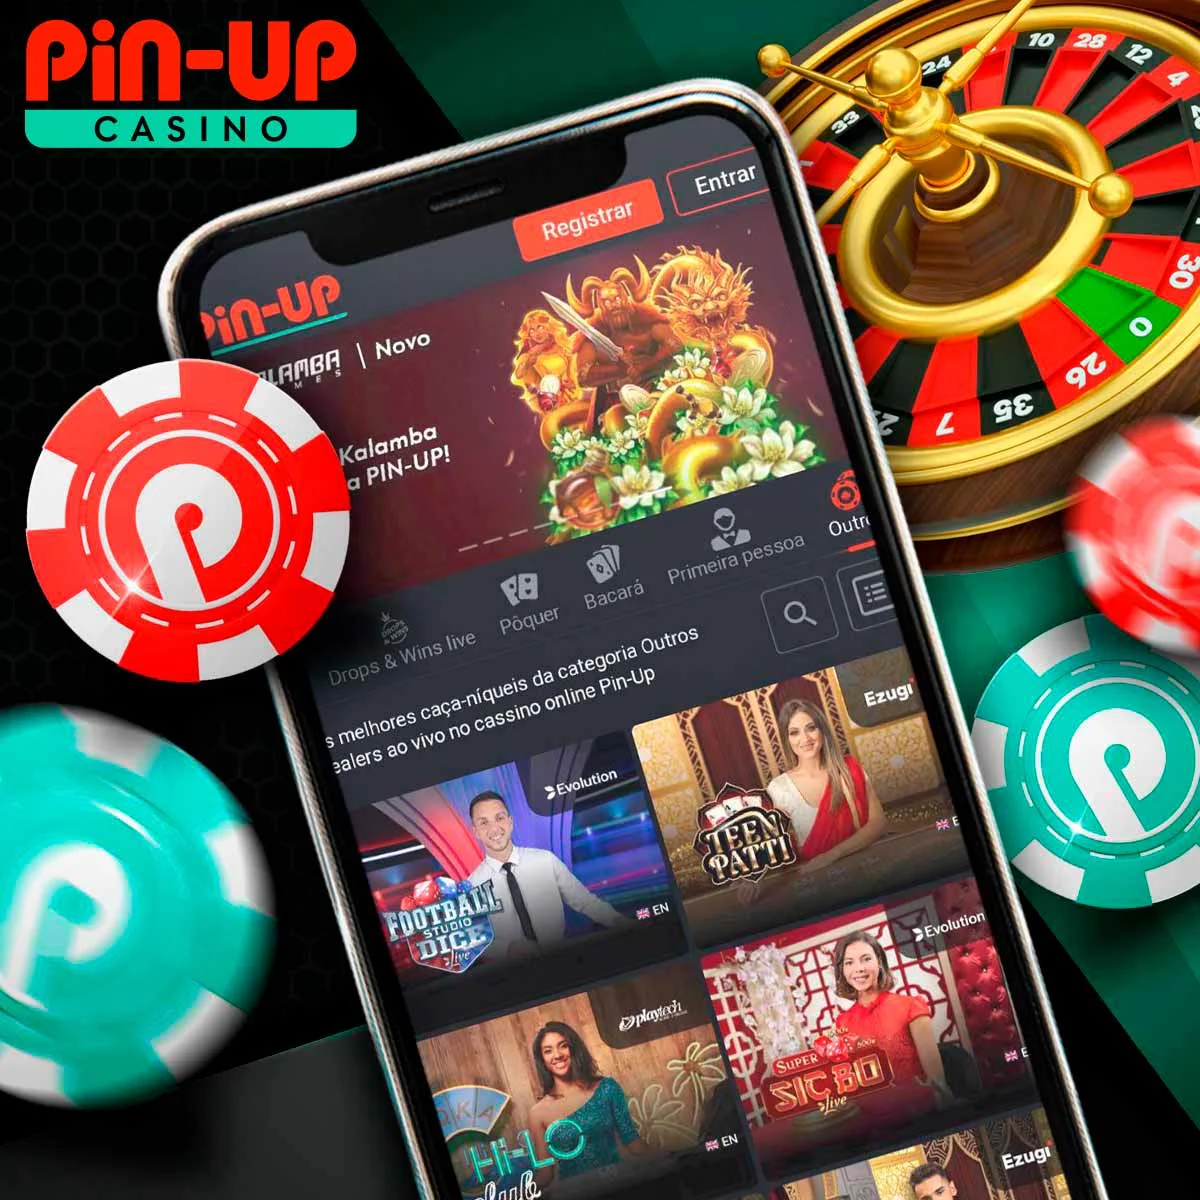 Jogos ao vivo no casino de apostas Pin-Up no Brasil